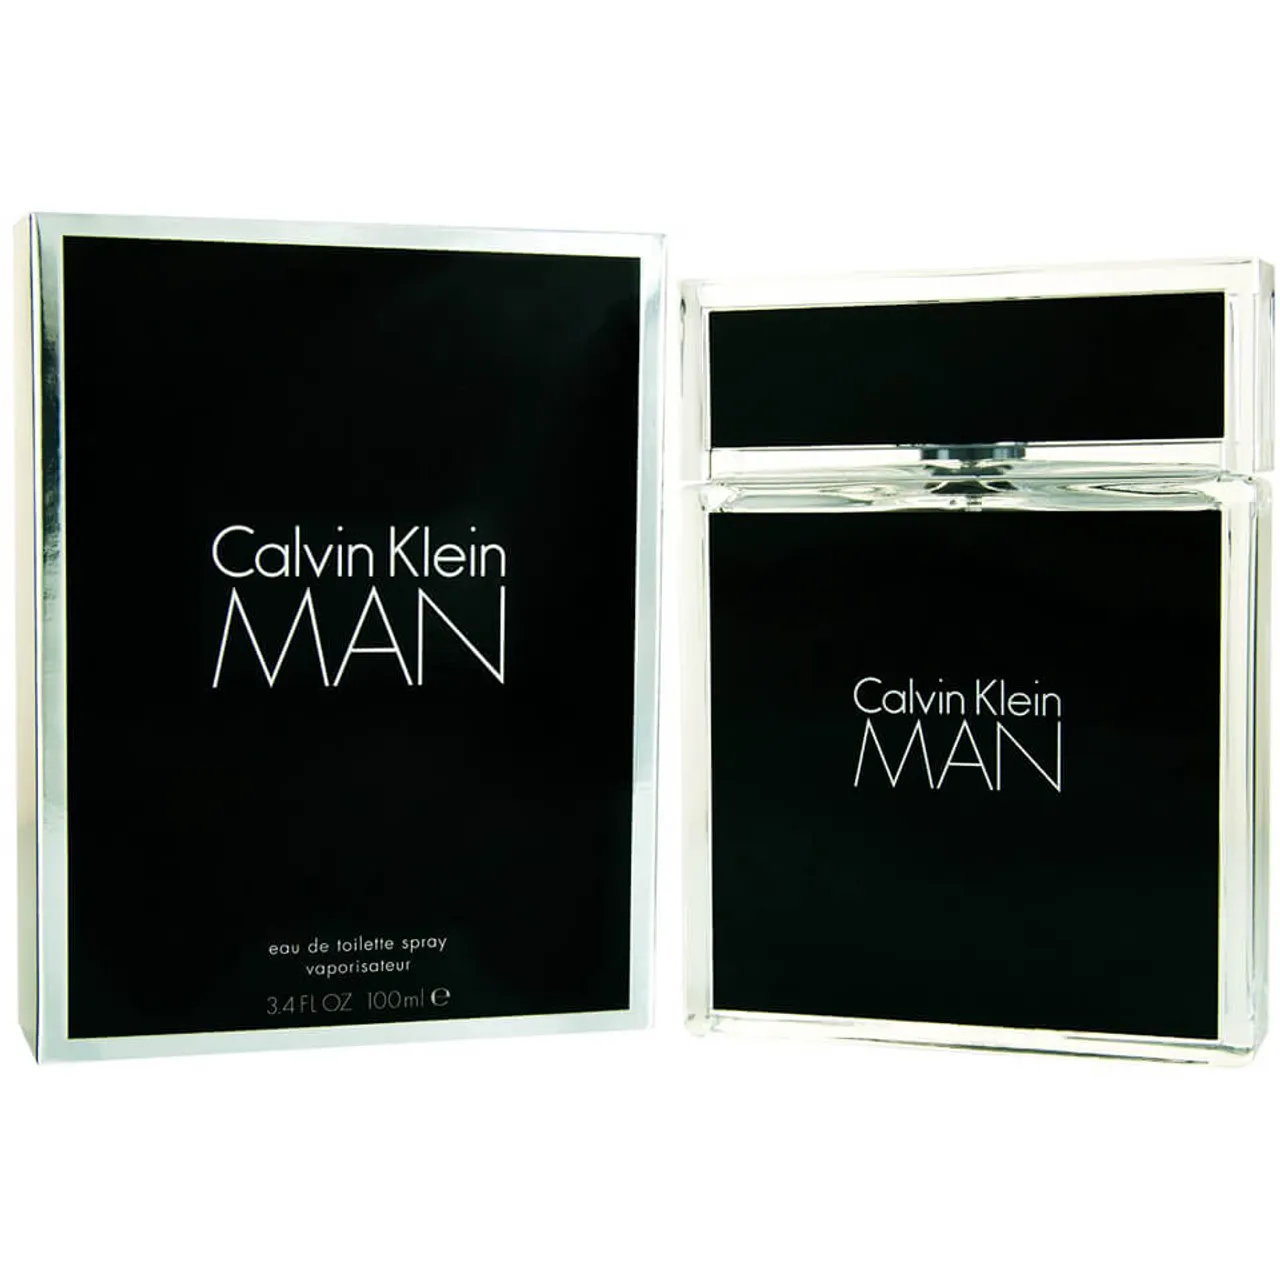 Calvin Klein Man Eau de Toilette 50ml - 100ml